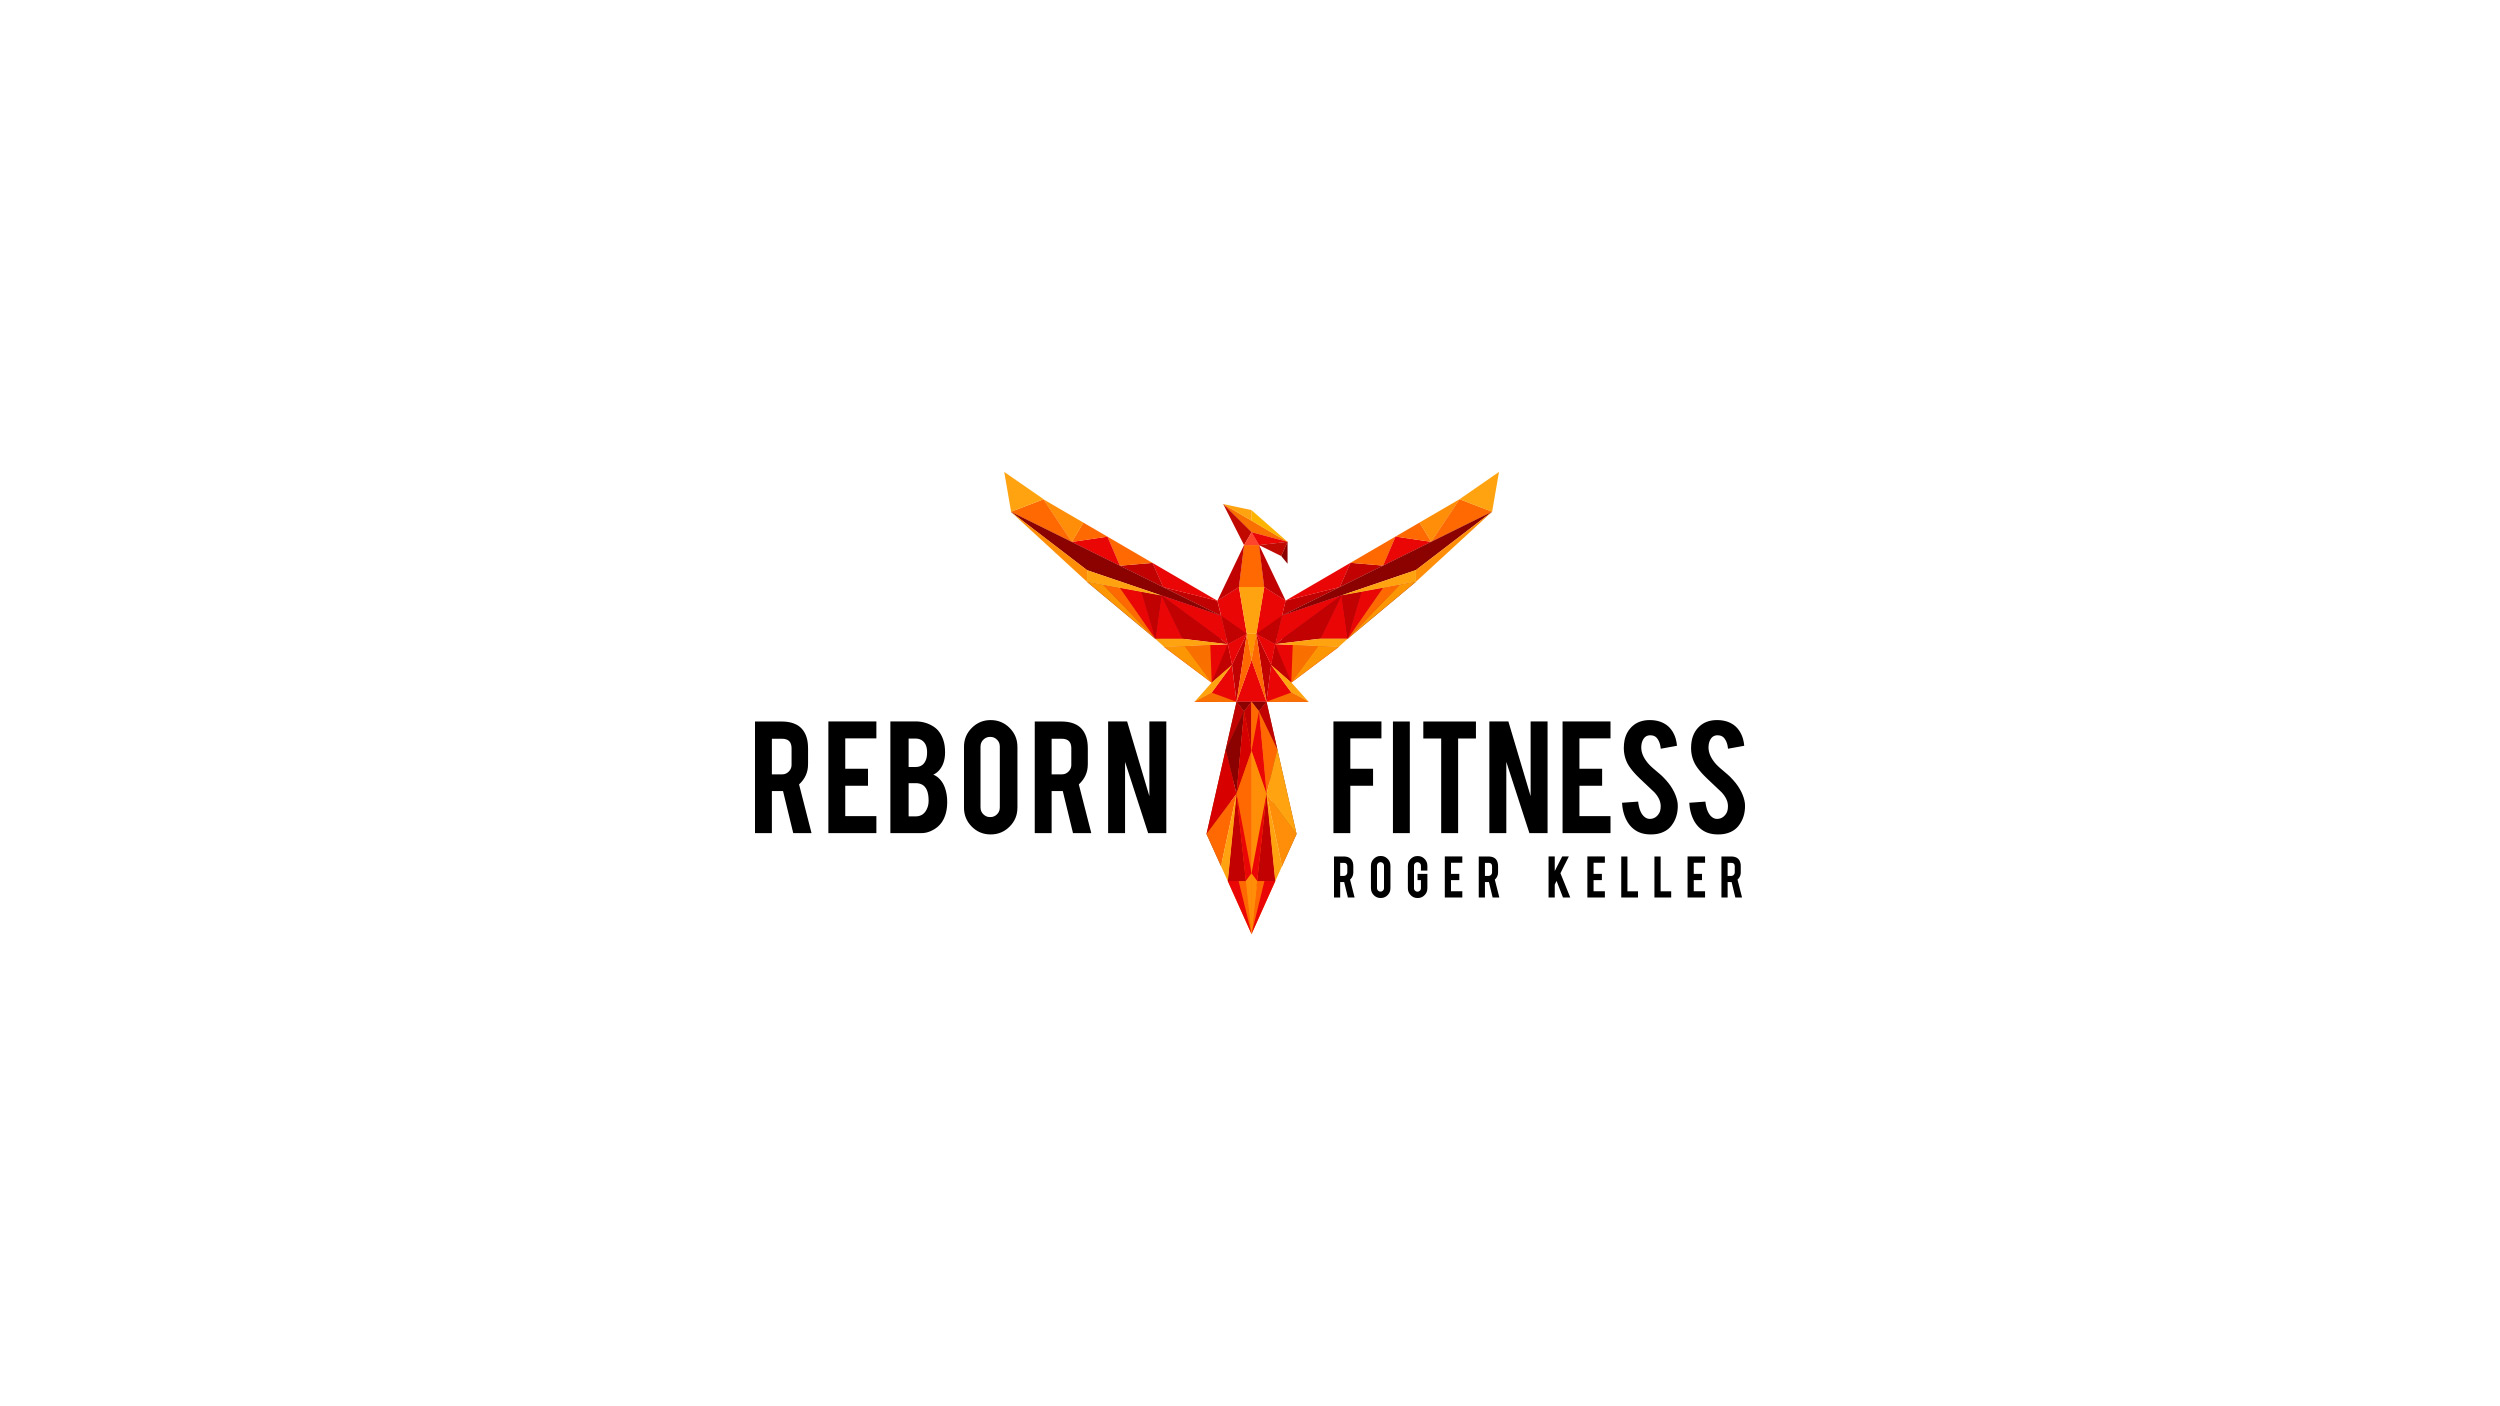 Reborn Fitness Brand Identity Annachechetka Com